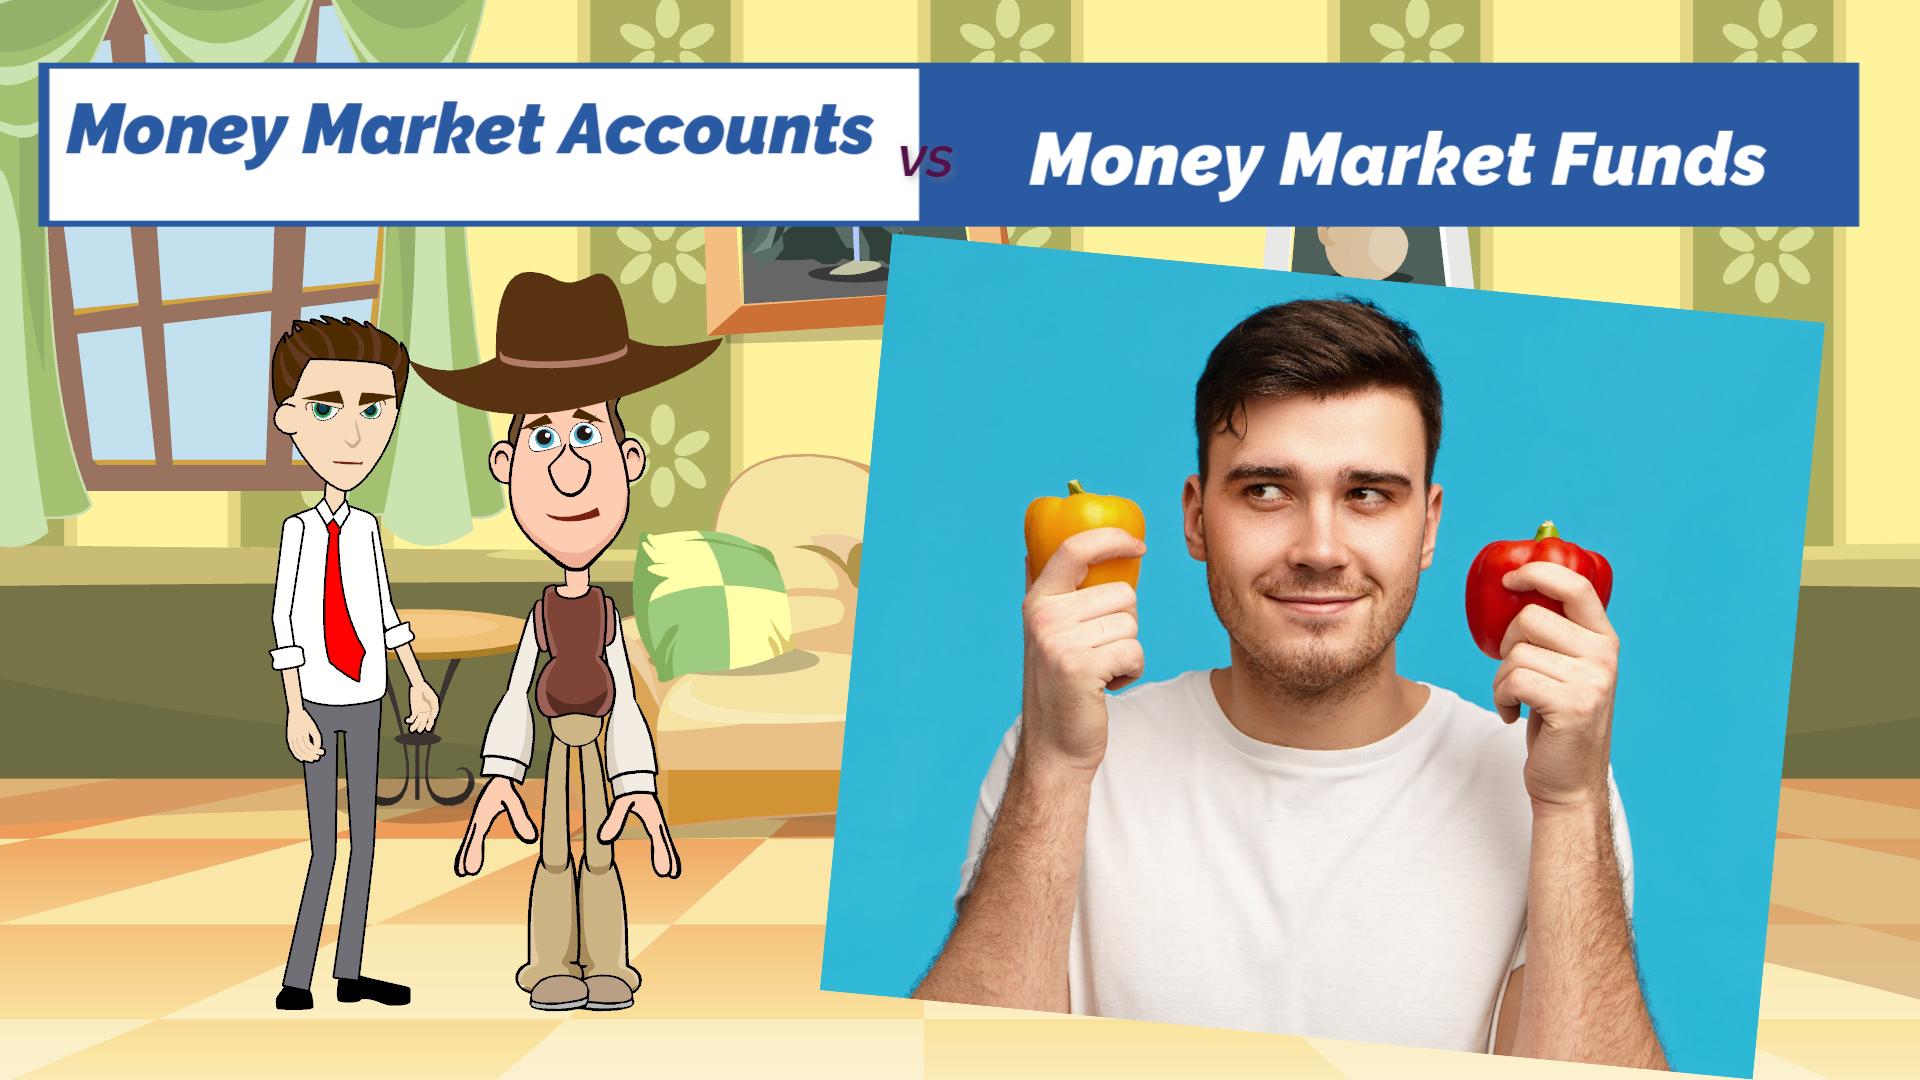 Money Market Accounts vs Money Market Funds